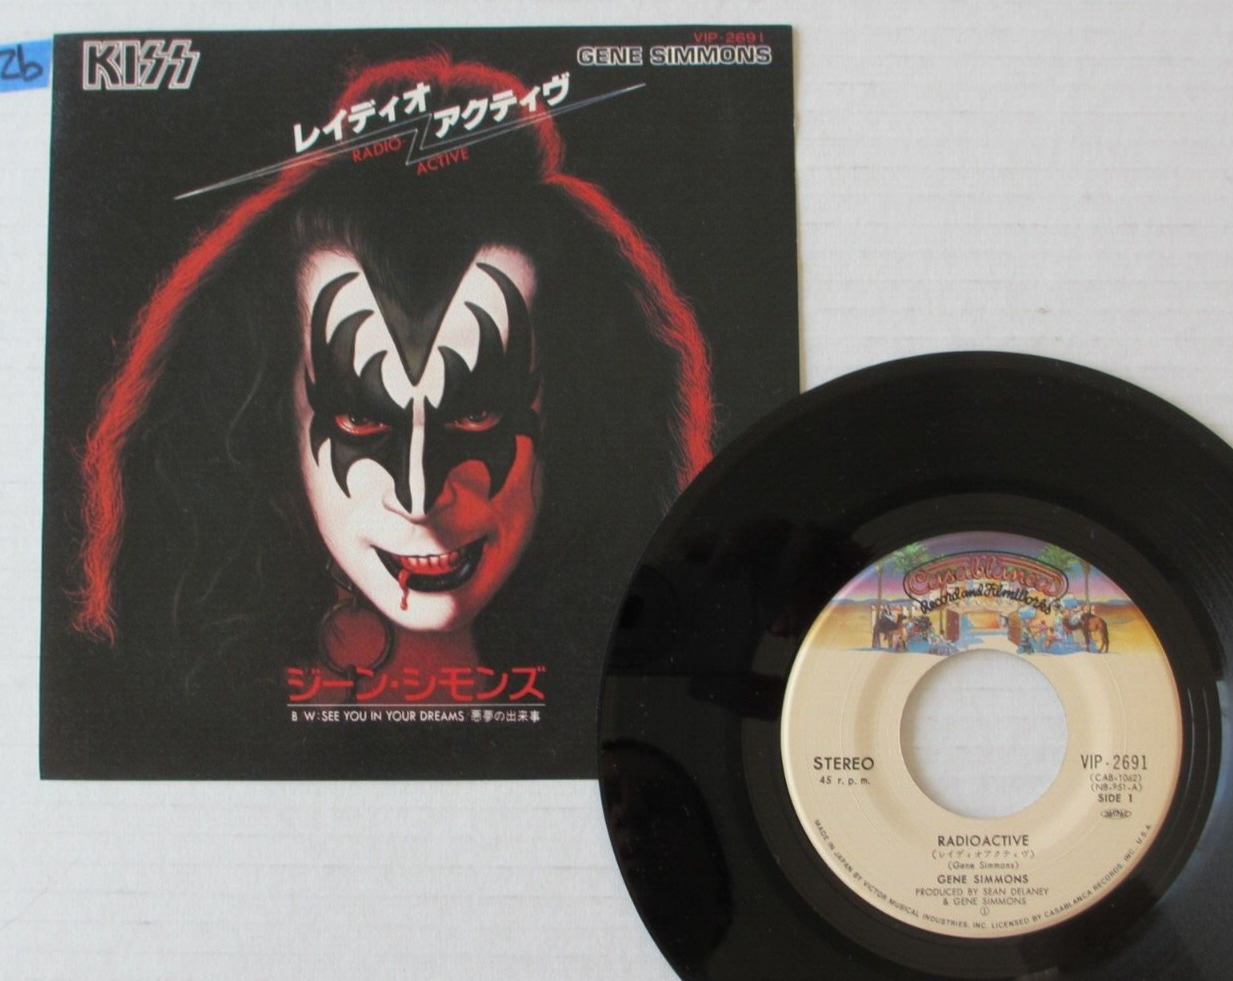 KISS- GENE SIMMONS- RADIOACTIVE 1978 JAPAN 7" VINYL RECORD SINGLE VIP-2691